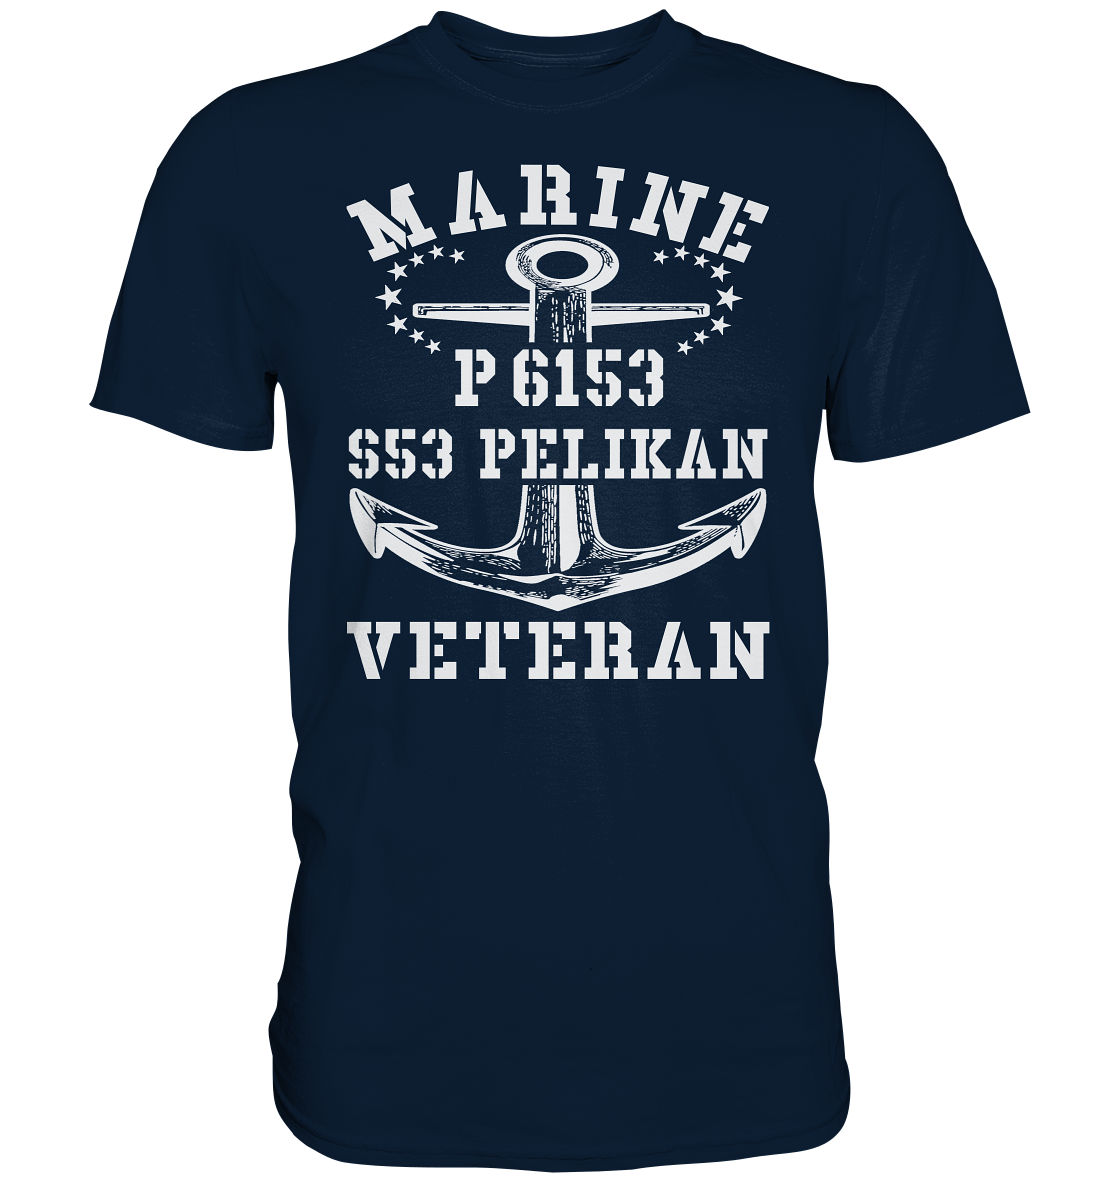 P6153 S53 PELIKAN Marine Veteran - Premium Shirt